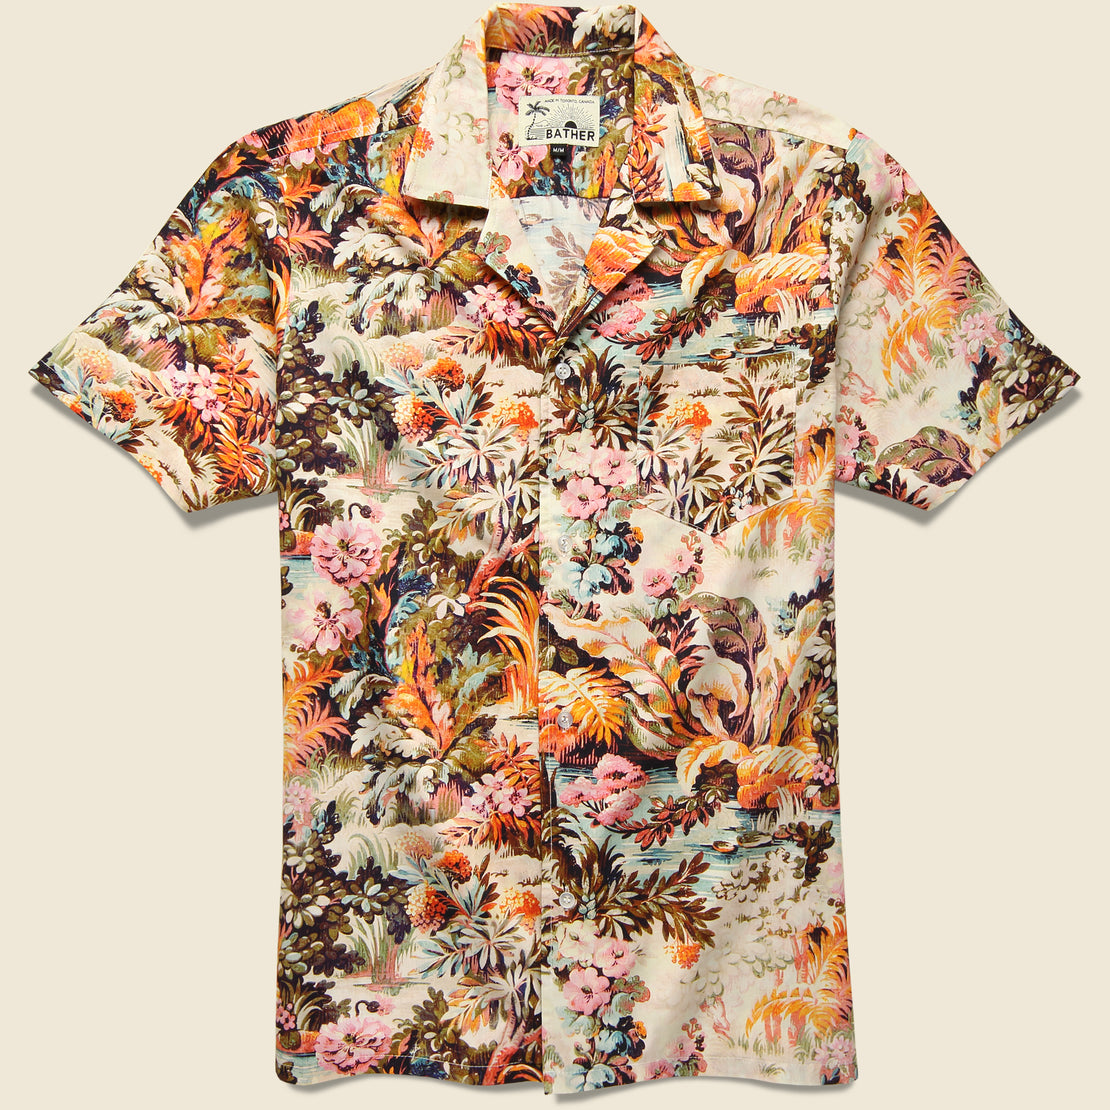 Bather Acid Forest Button Up Shirt - Multi